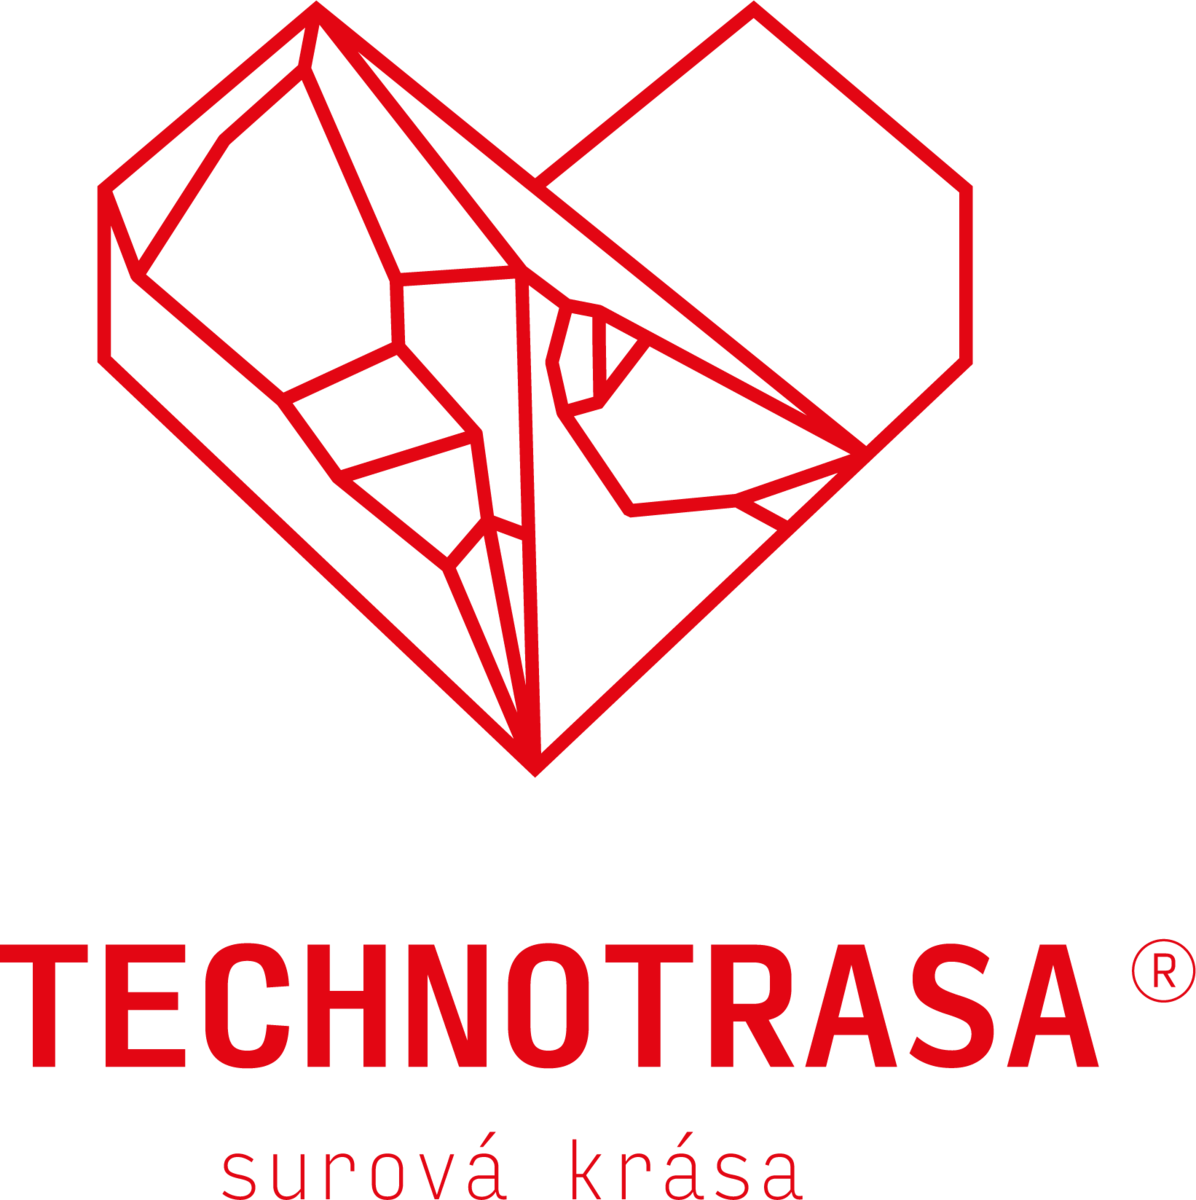 Techotrasa